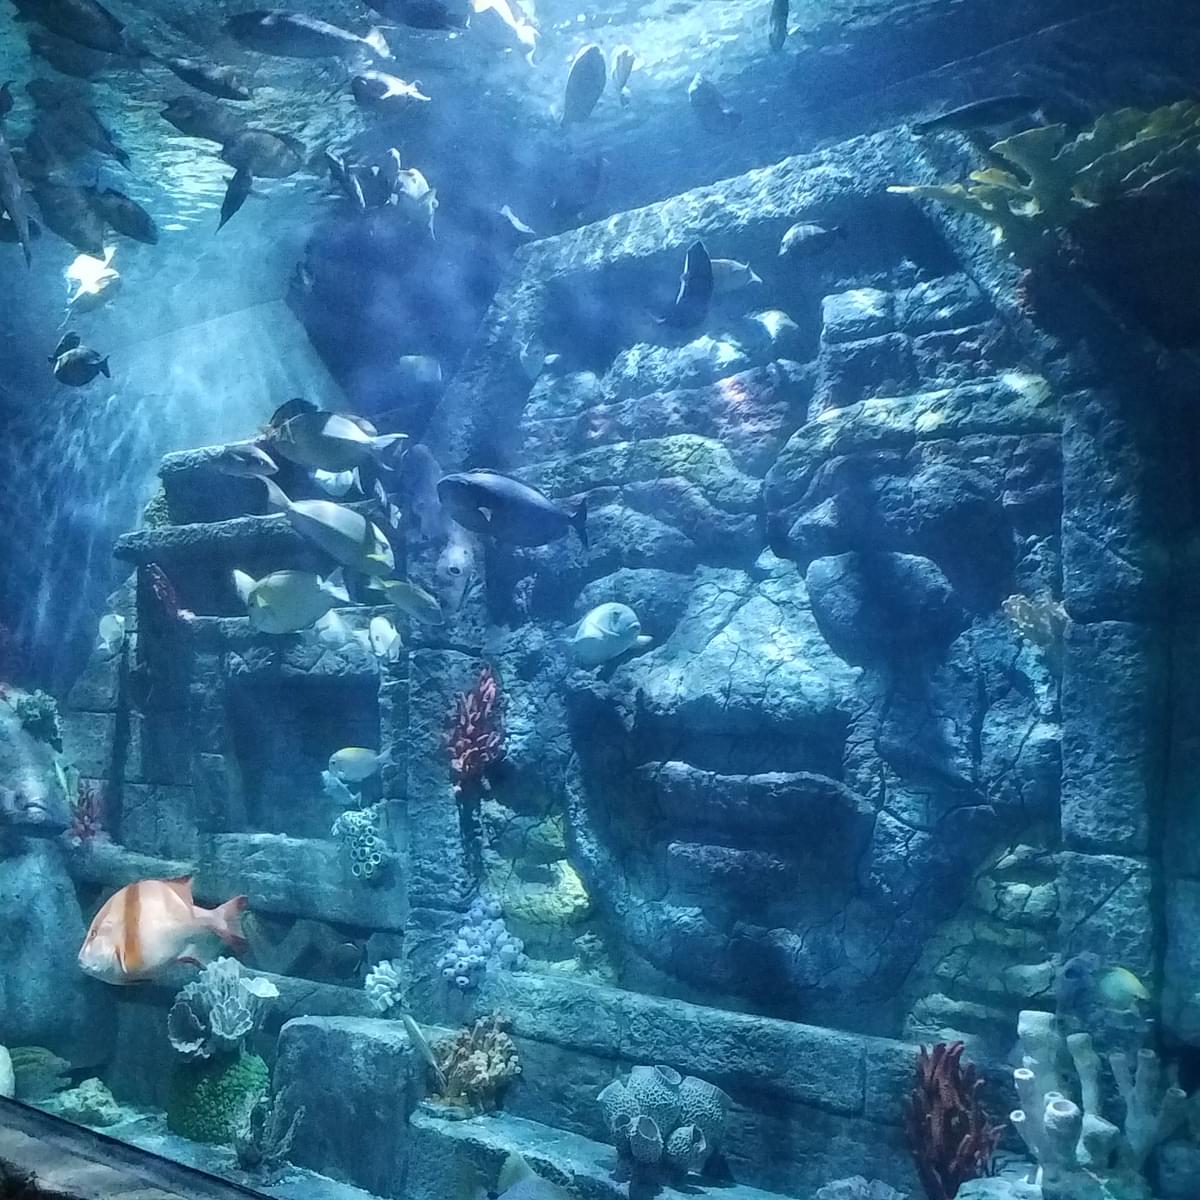 Explore different zones of the aquarium like the Shipwrek